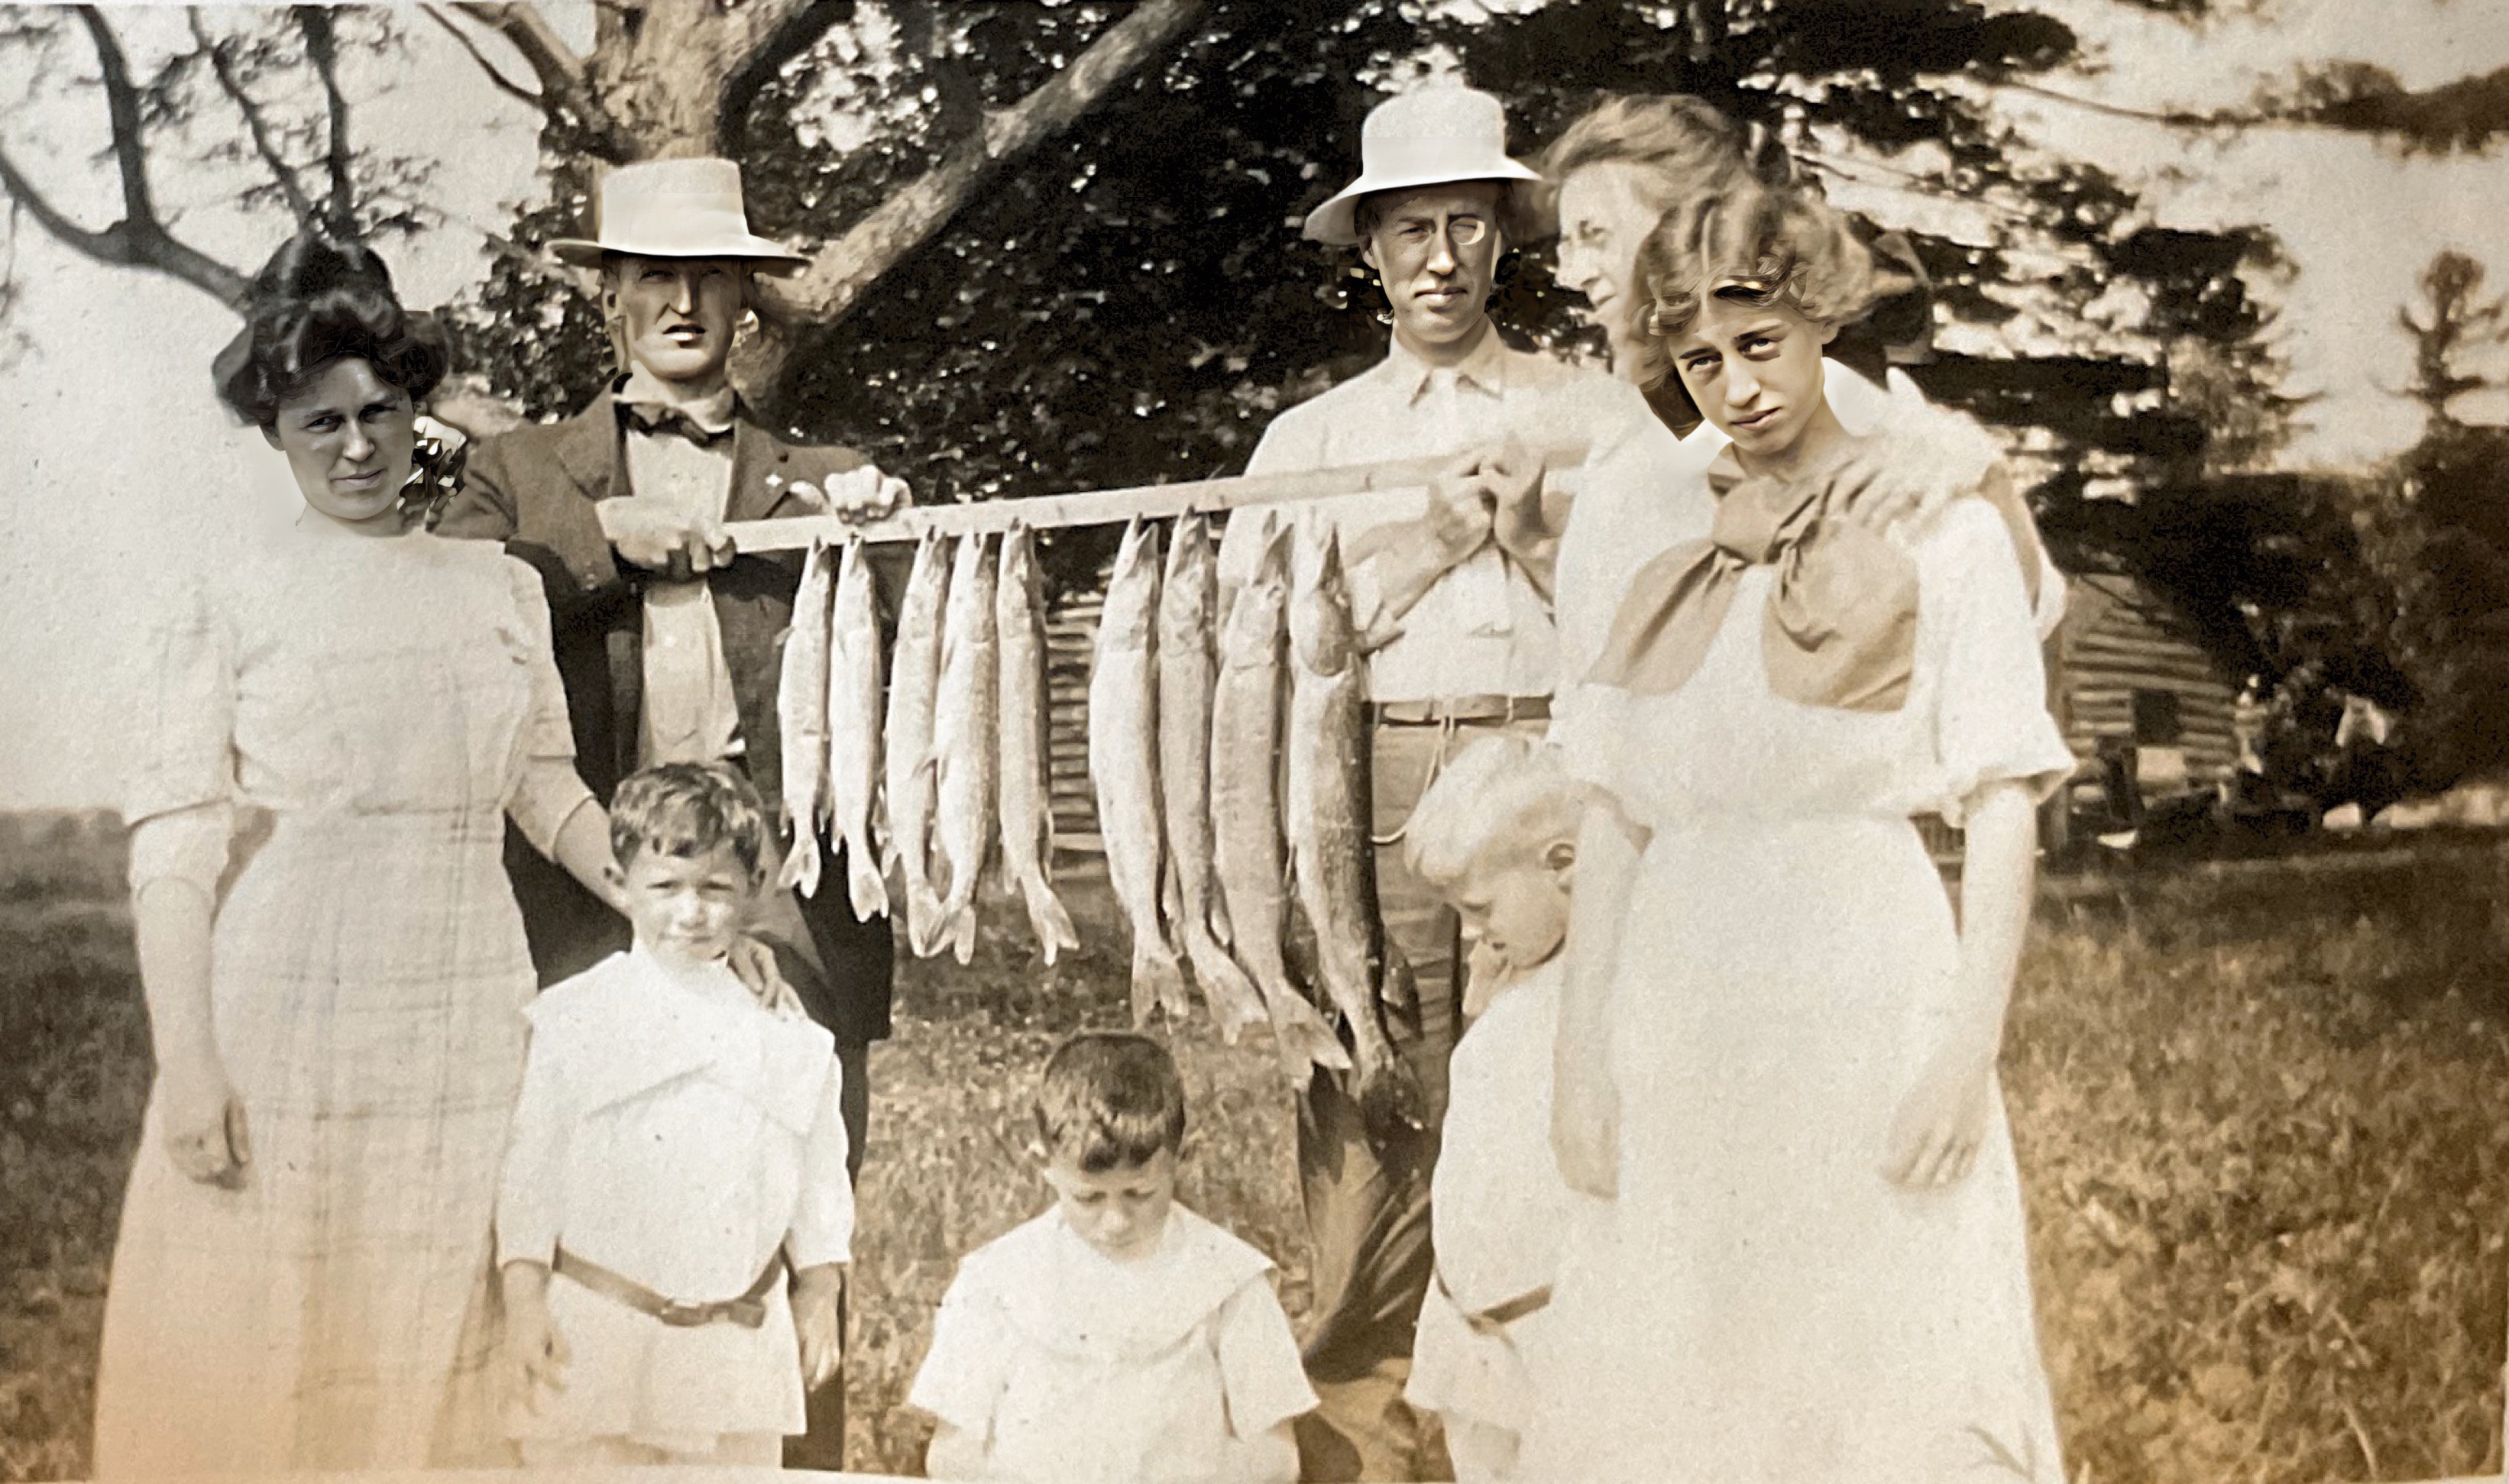 Bert Lauren with fish on right, Mary Lauren looking bored, and Charles Lauren behind her, July 1912.